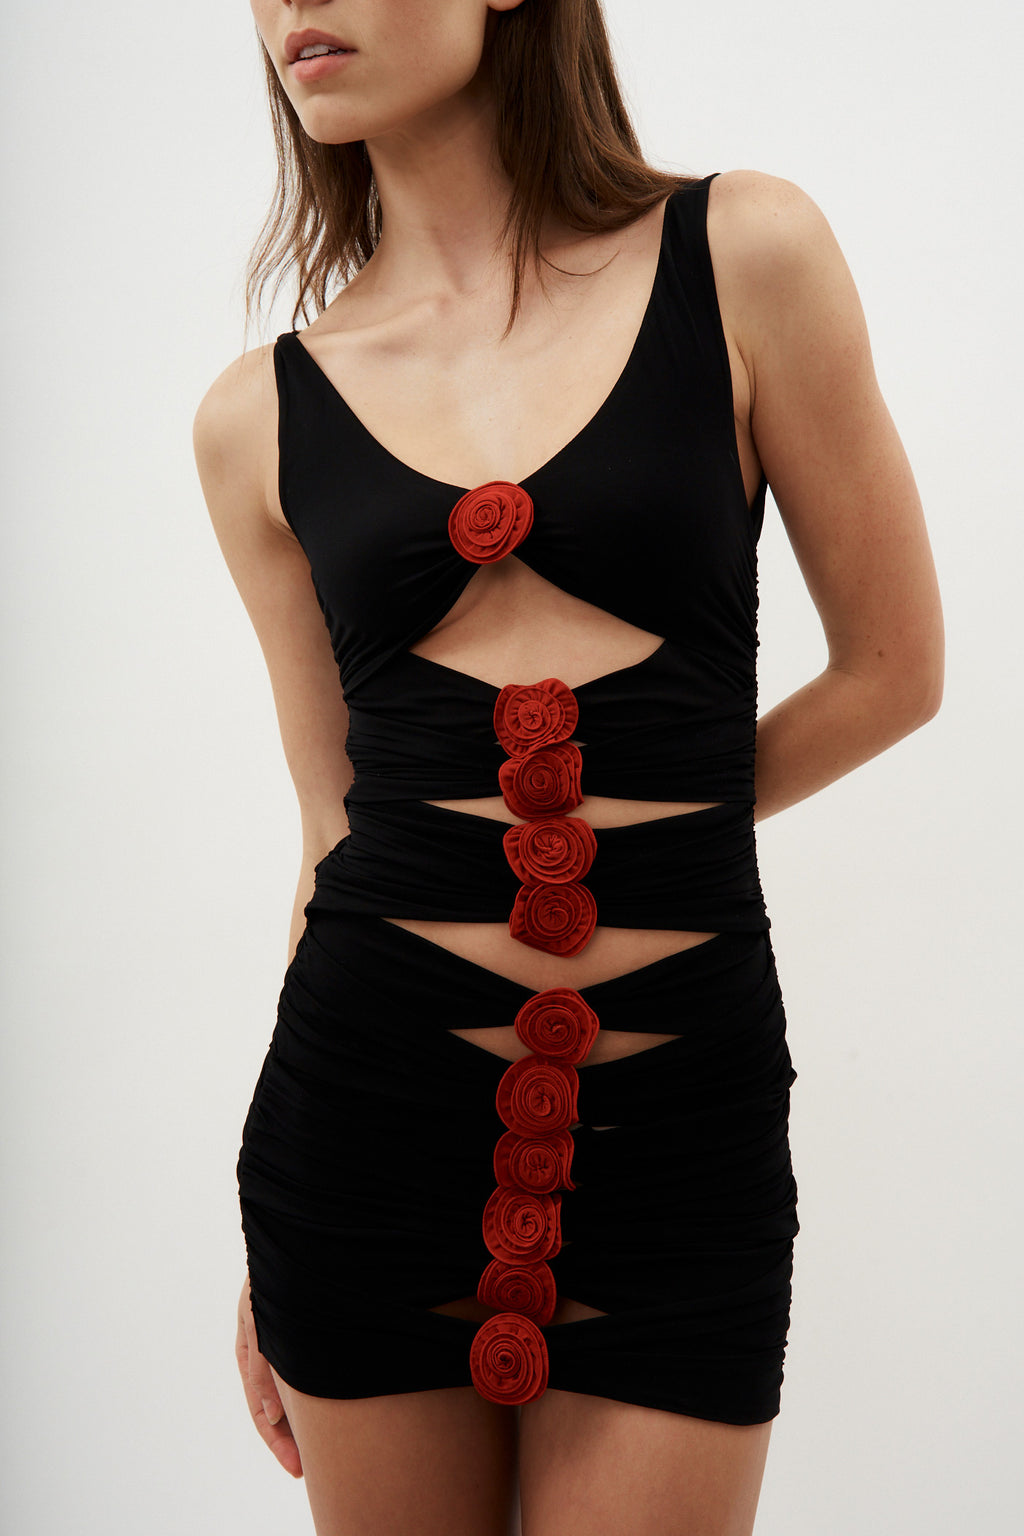 V Neck Bandage Red Roses Black Dress